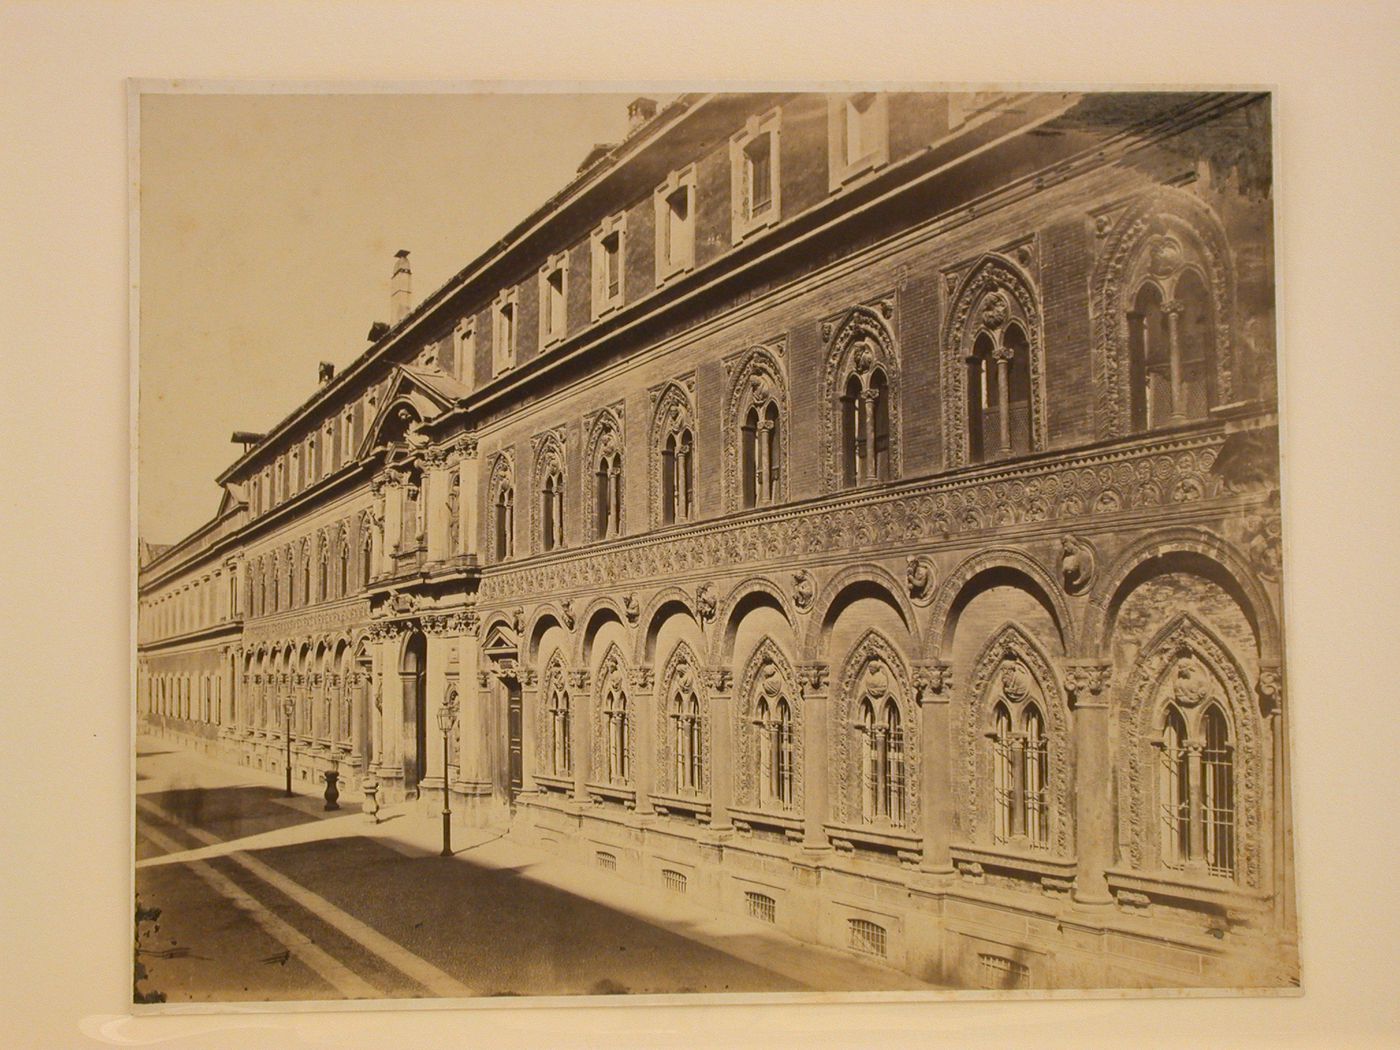 Side view of the façade of the Ospedale maggiore di Milano, Milan, Italy